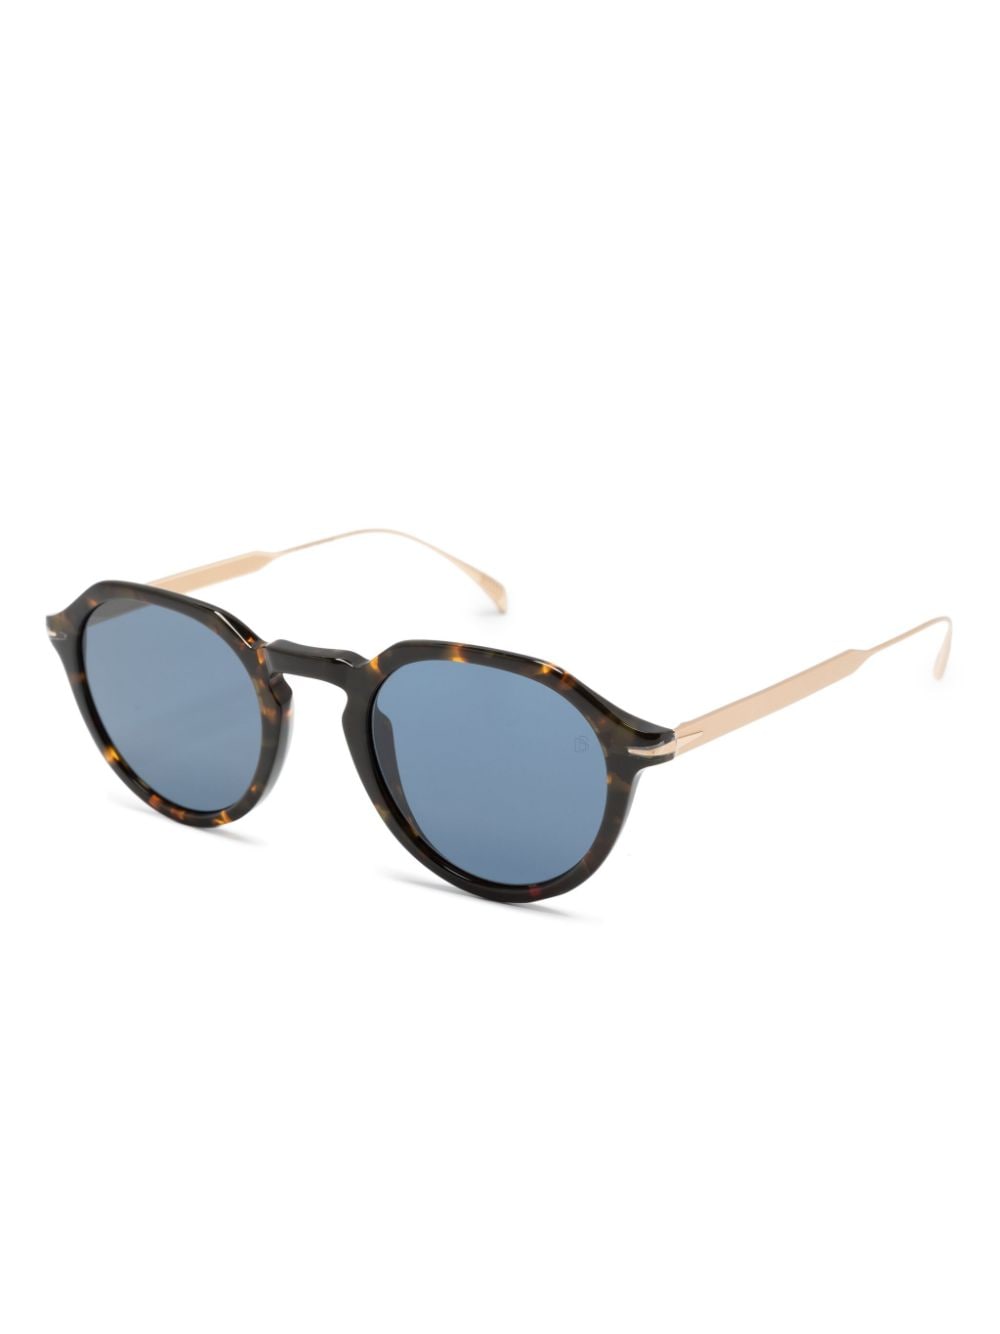 Image 2 of Eyewear by David Beckham 1098/S round-frame sunglasses